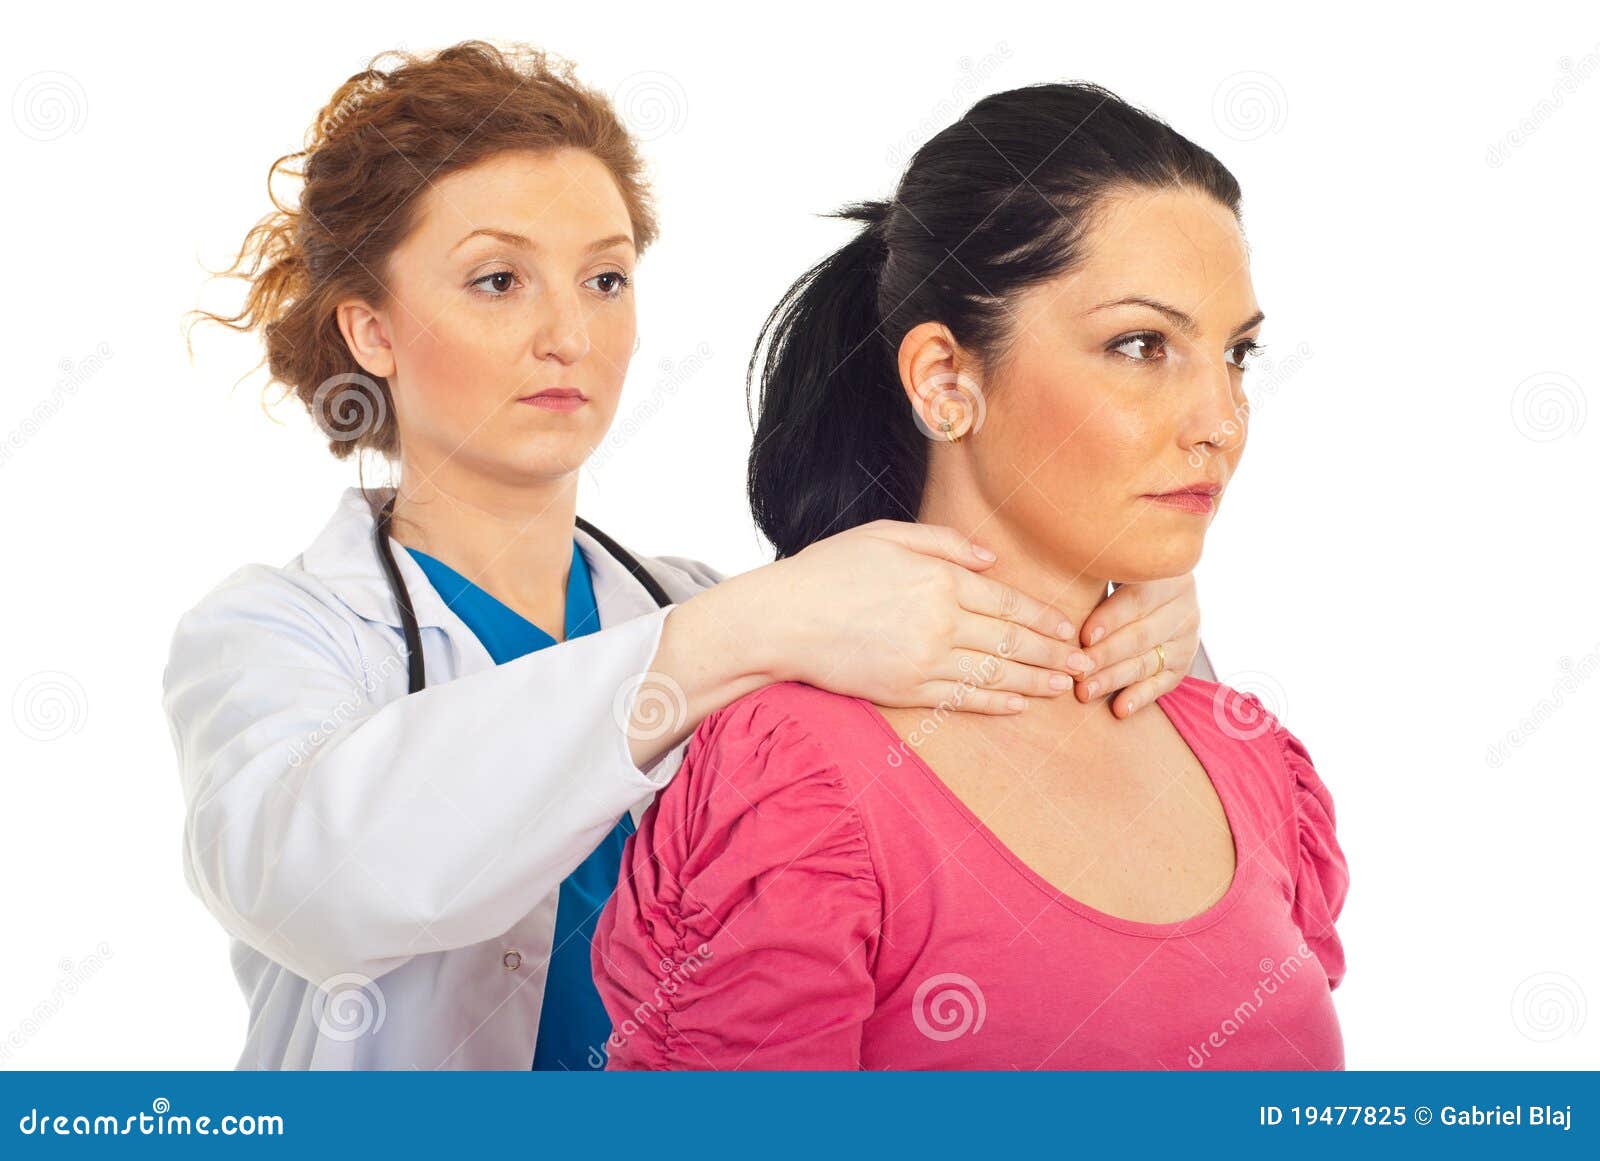 endocrinologist examine thyroid woman